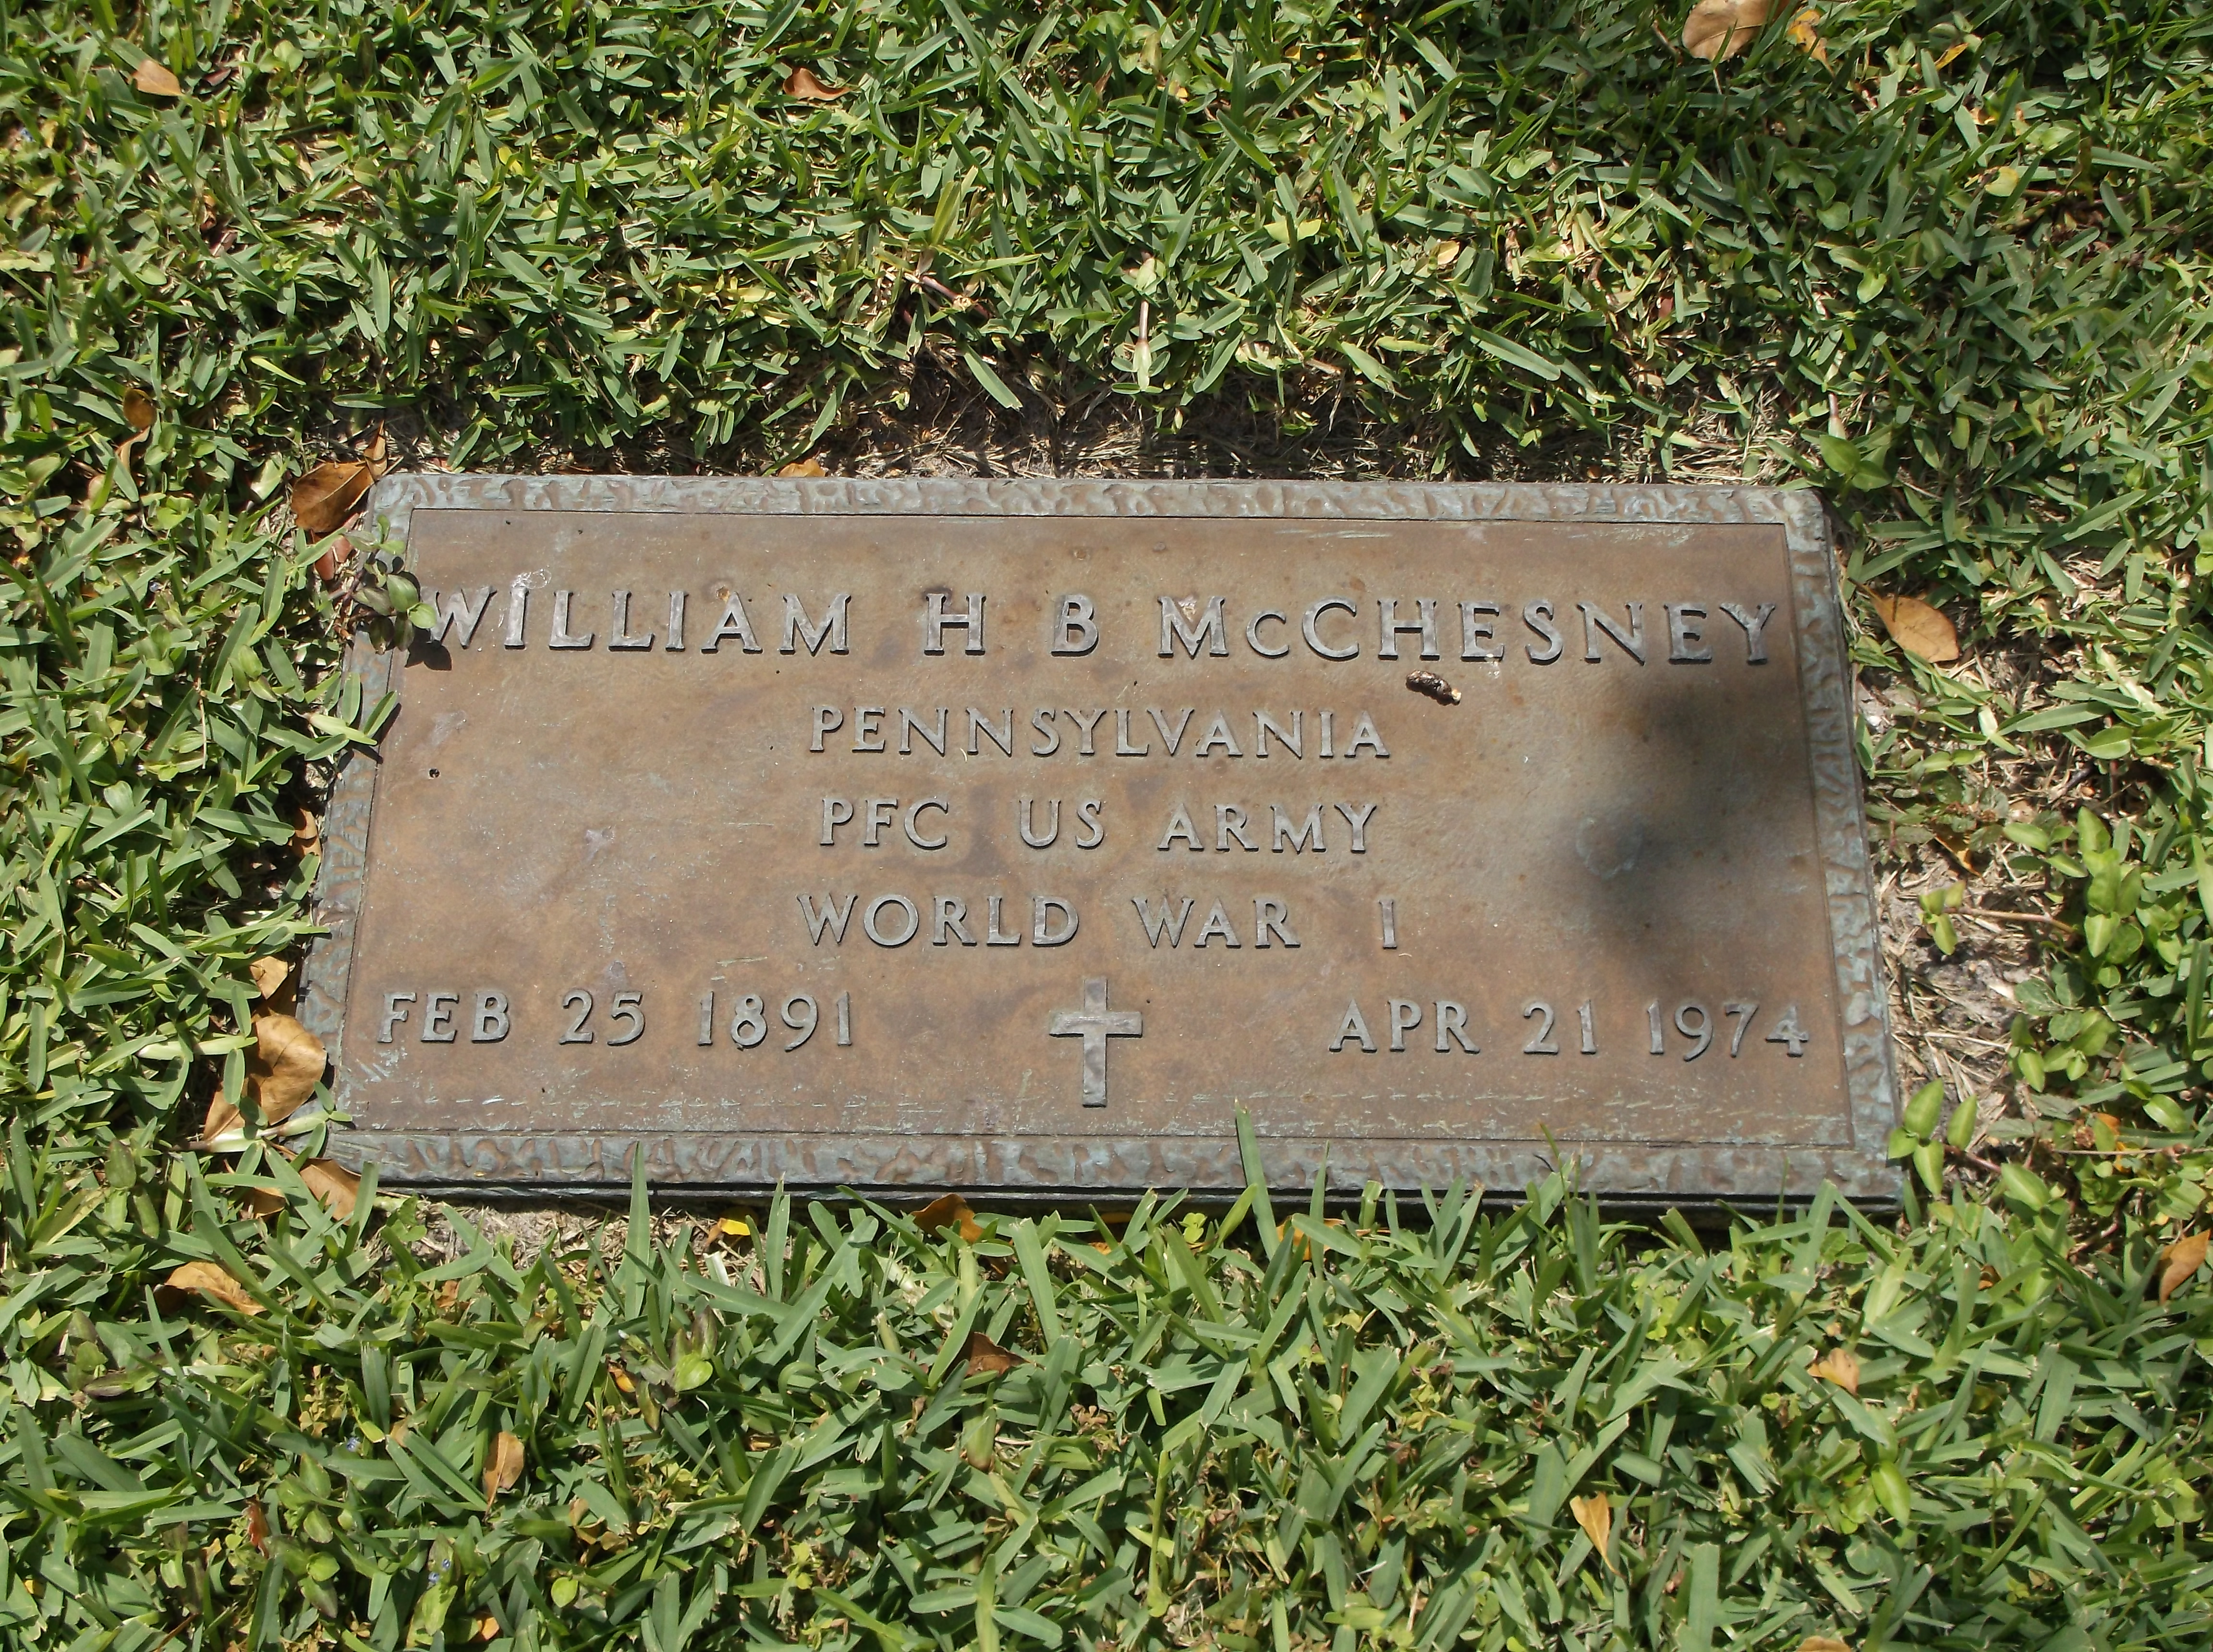 William H B McChesney